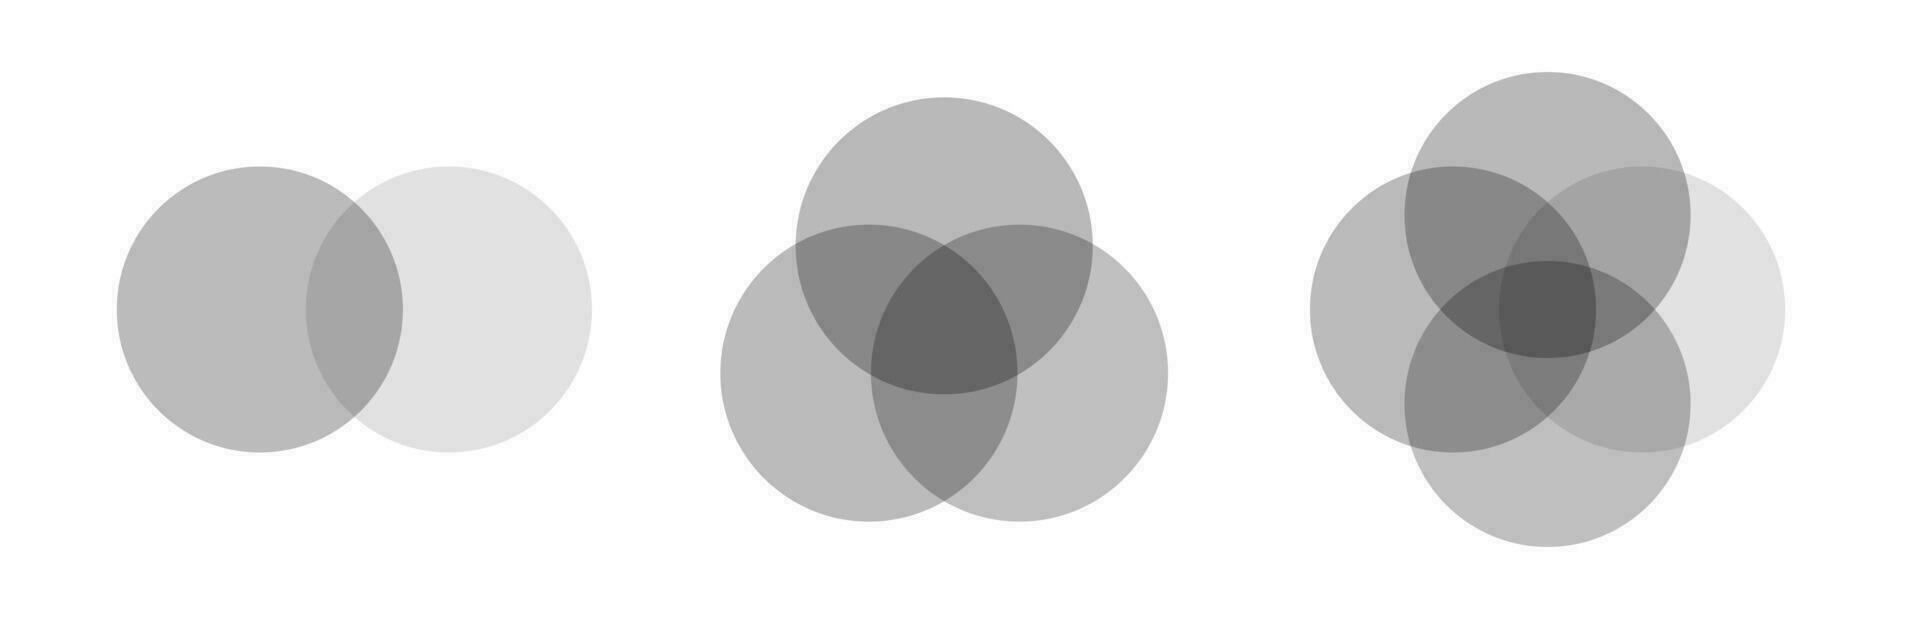 Venn diagram set black style for presentation vector